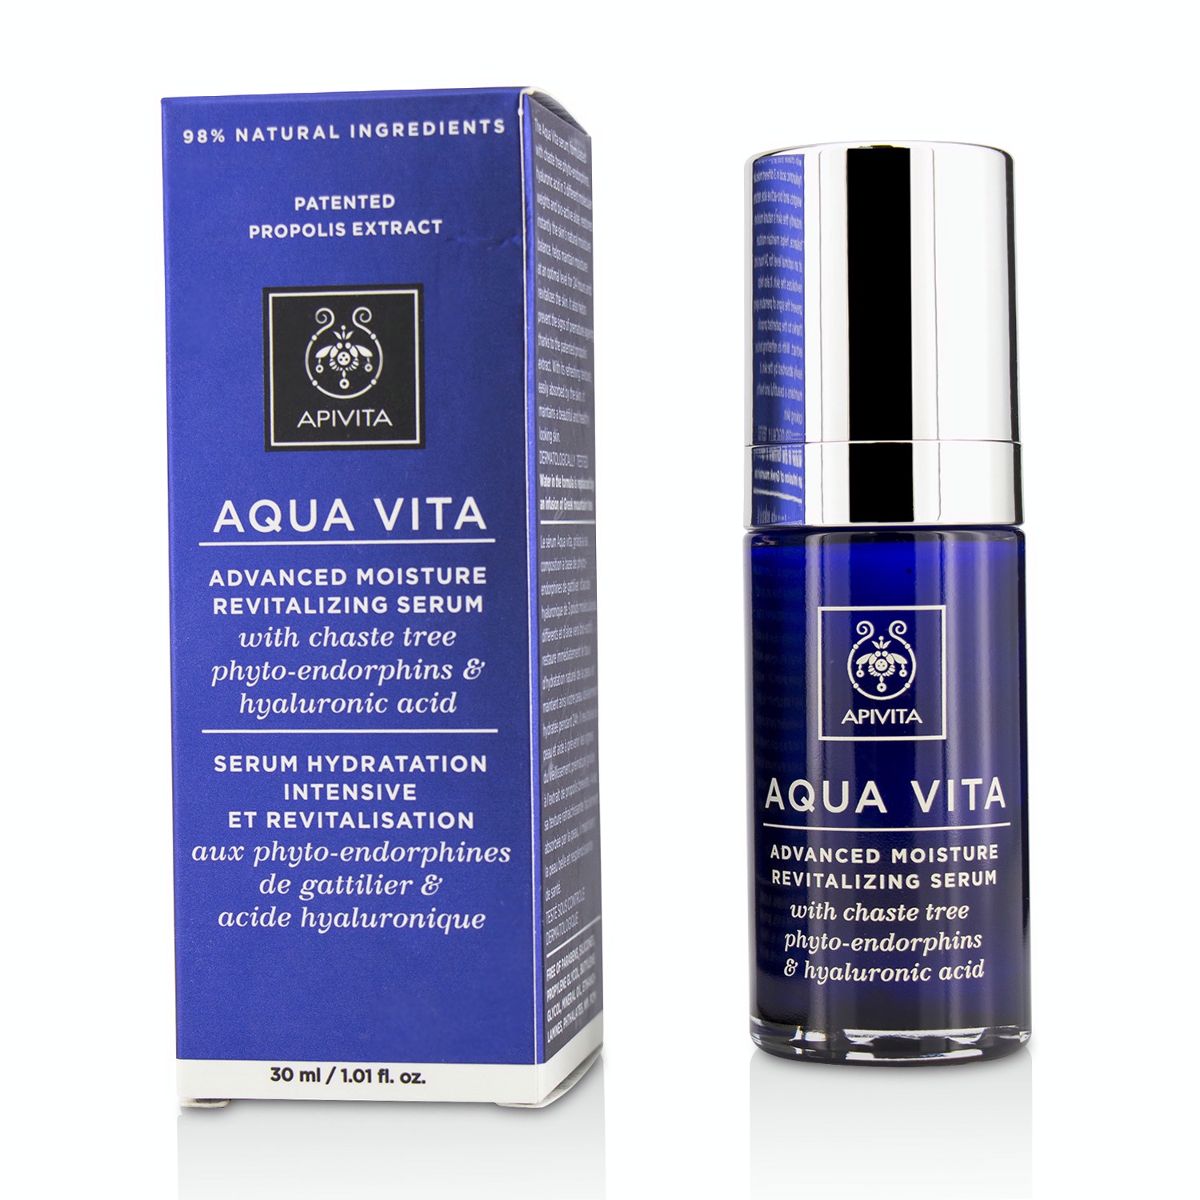 Aqua Vita Advanced Moisture Revitalizing Serum Apivita Image